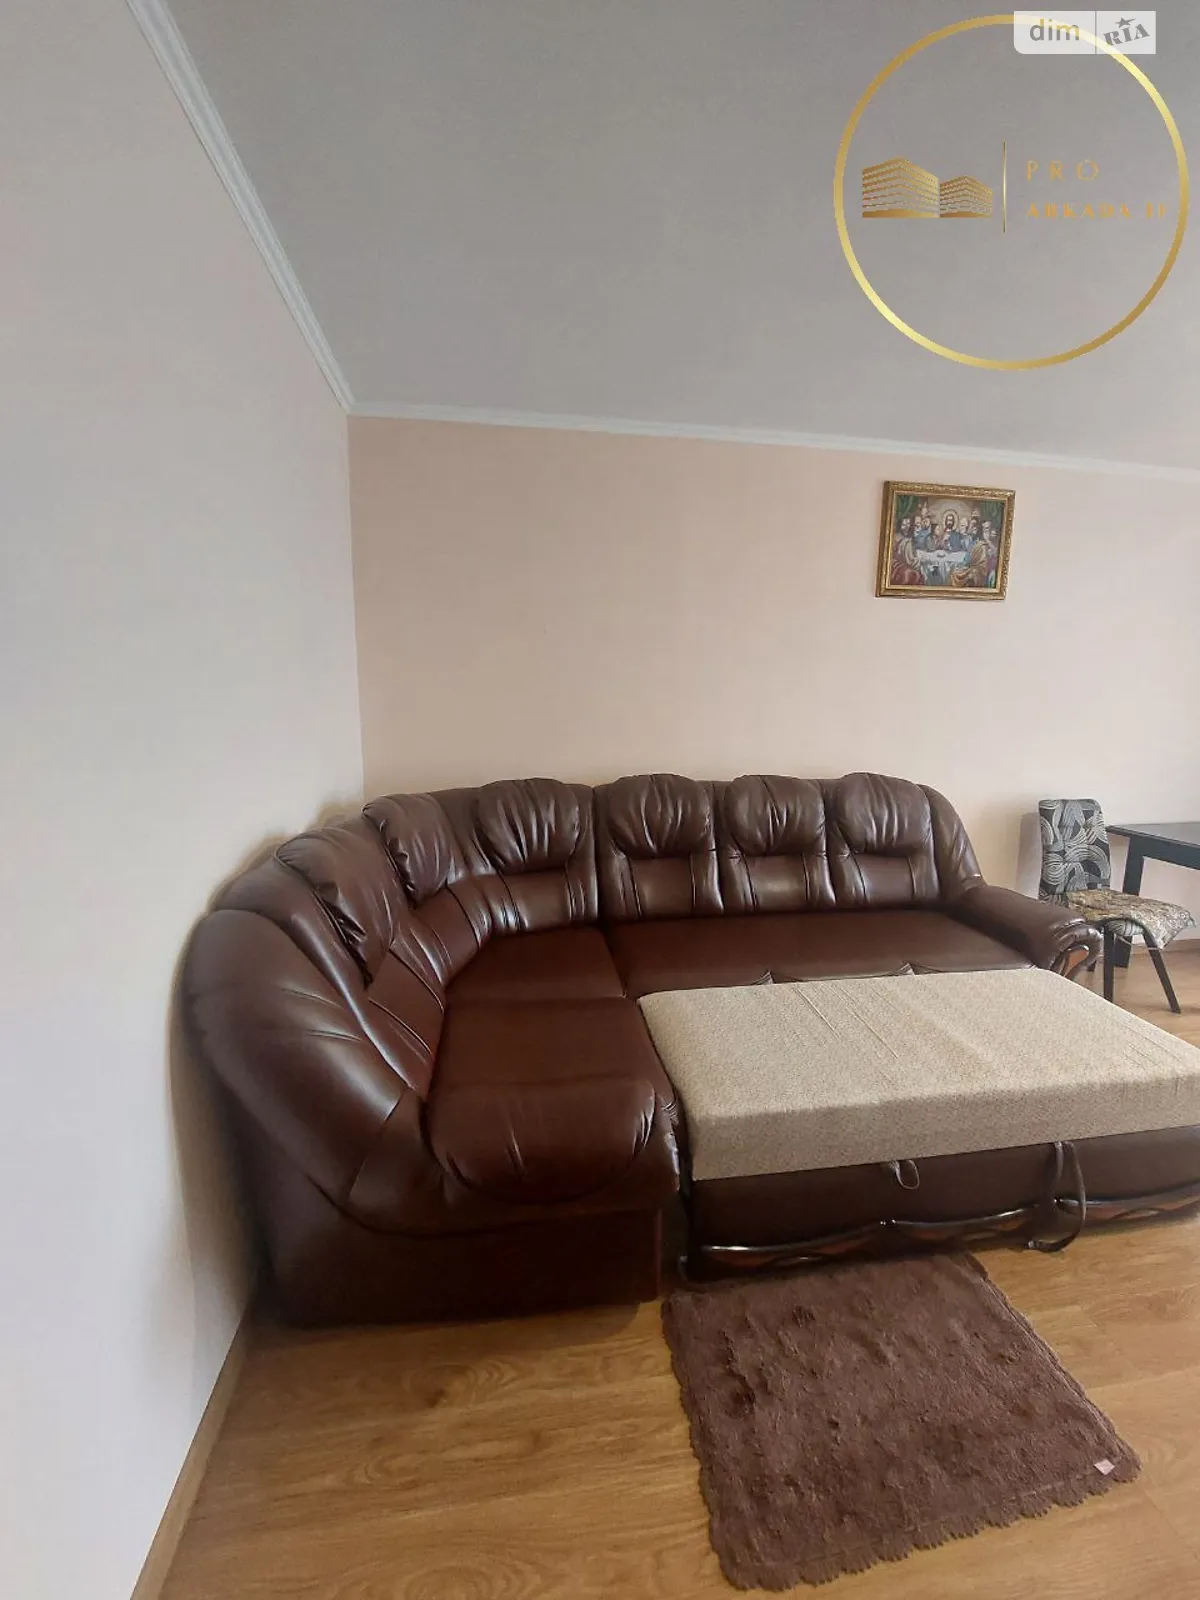 Сдается в аренду 2-комнатная квартира 65 кв. м в Ивано-Франковске, цена: 11500 грн